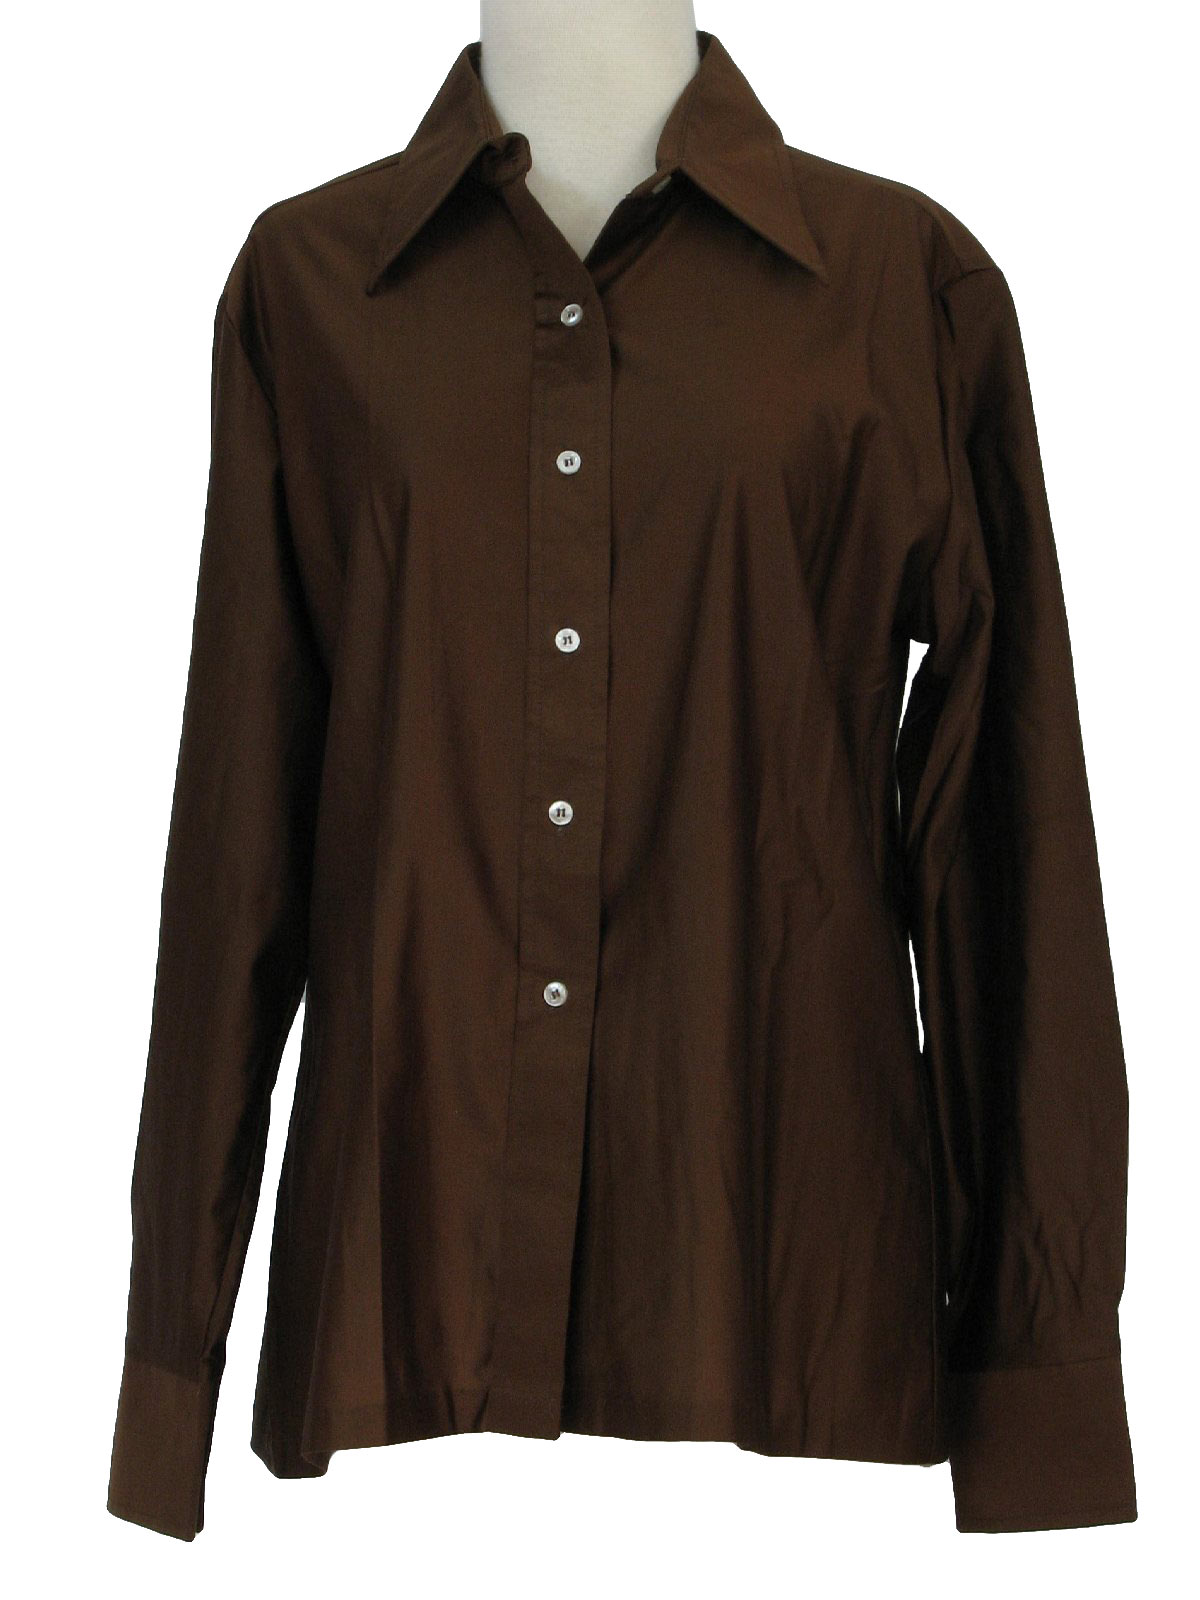 Retro 70s Disco Shirt (Elles Belles) : 70s -Elles Belles- Womens brown ...